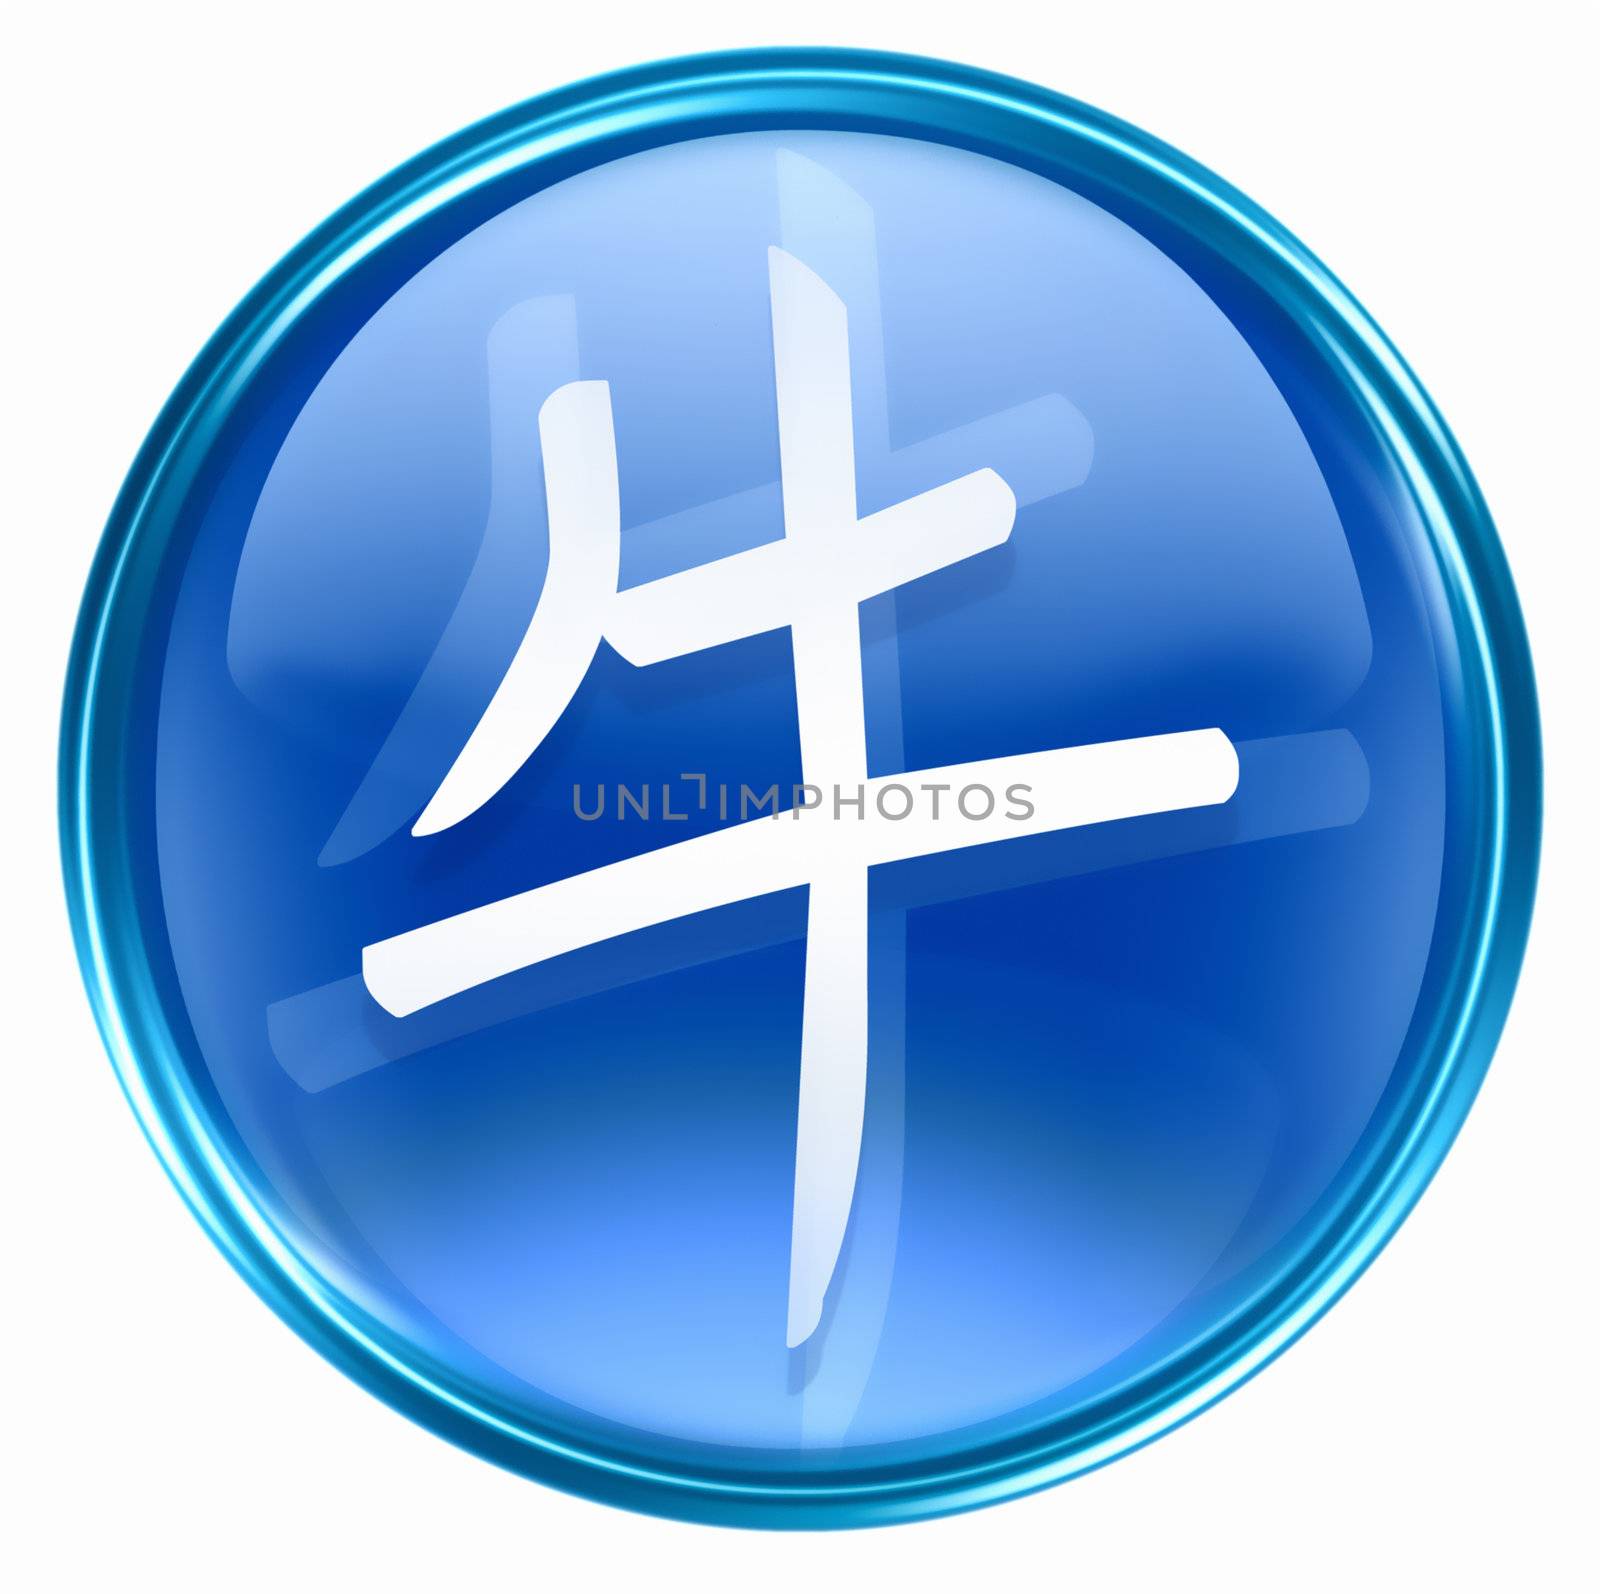 Ox Zodiac icon blue, isolated on white background.